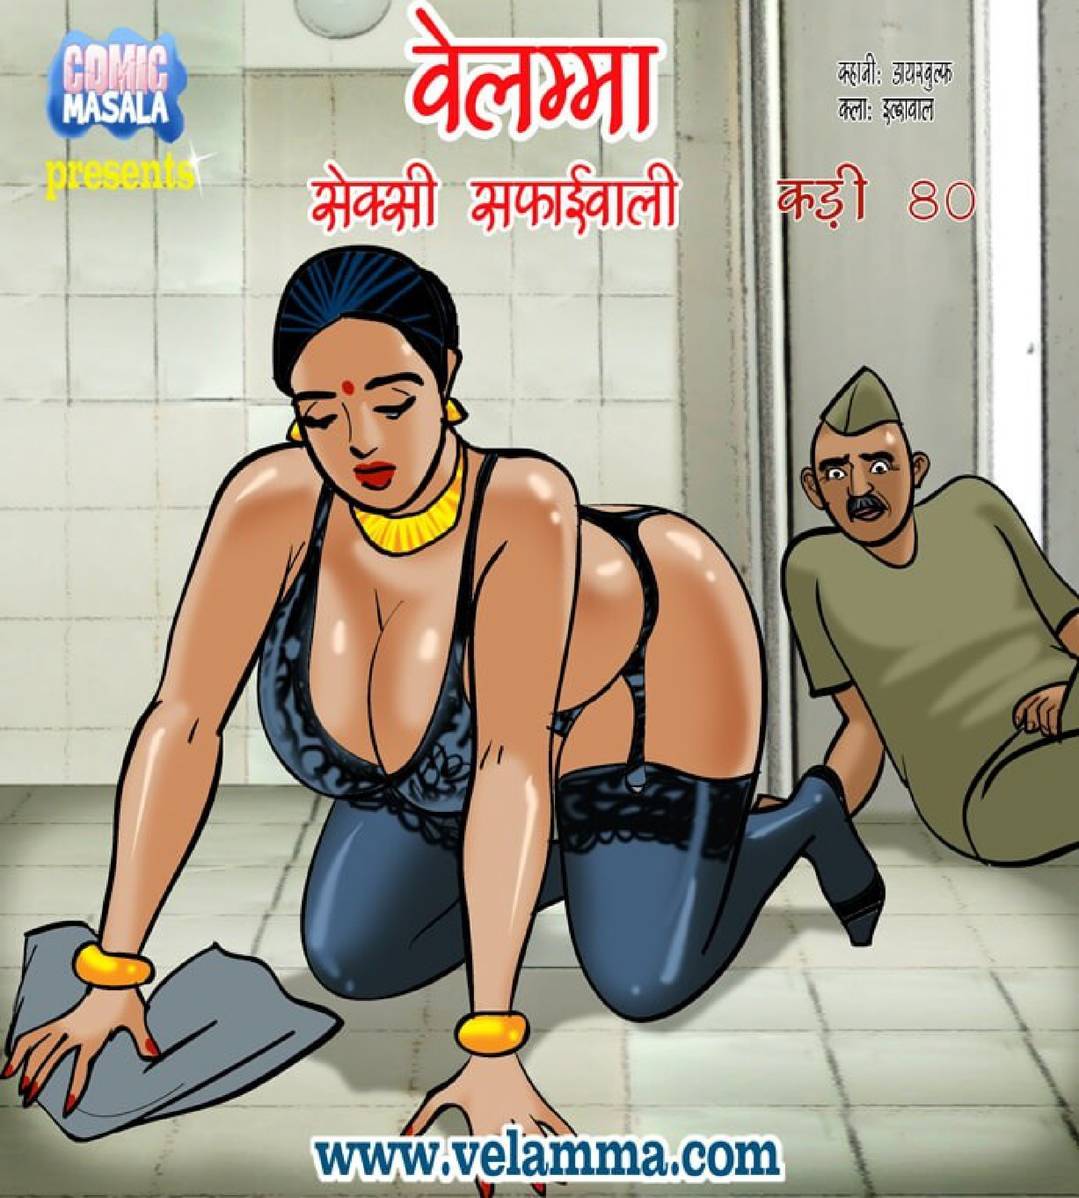 Velamma Episode 80 Hindi – Sexy safaiwali (सैक्सी सफाइवाली) - 23 - FSIComics